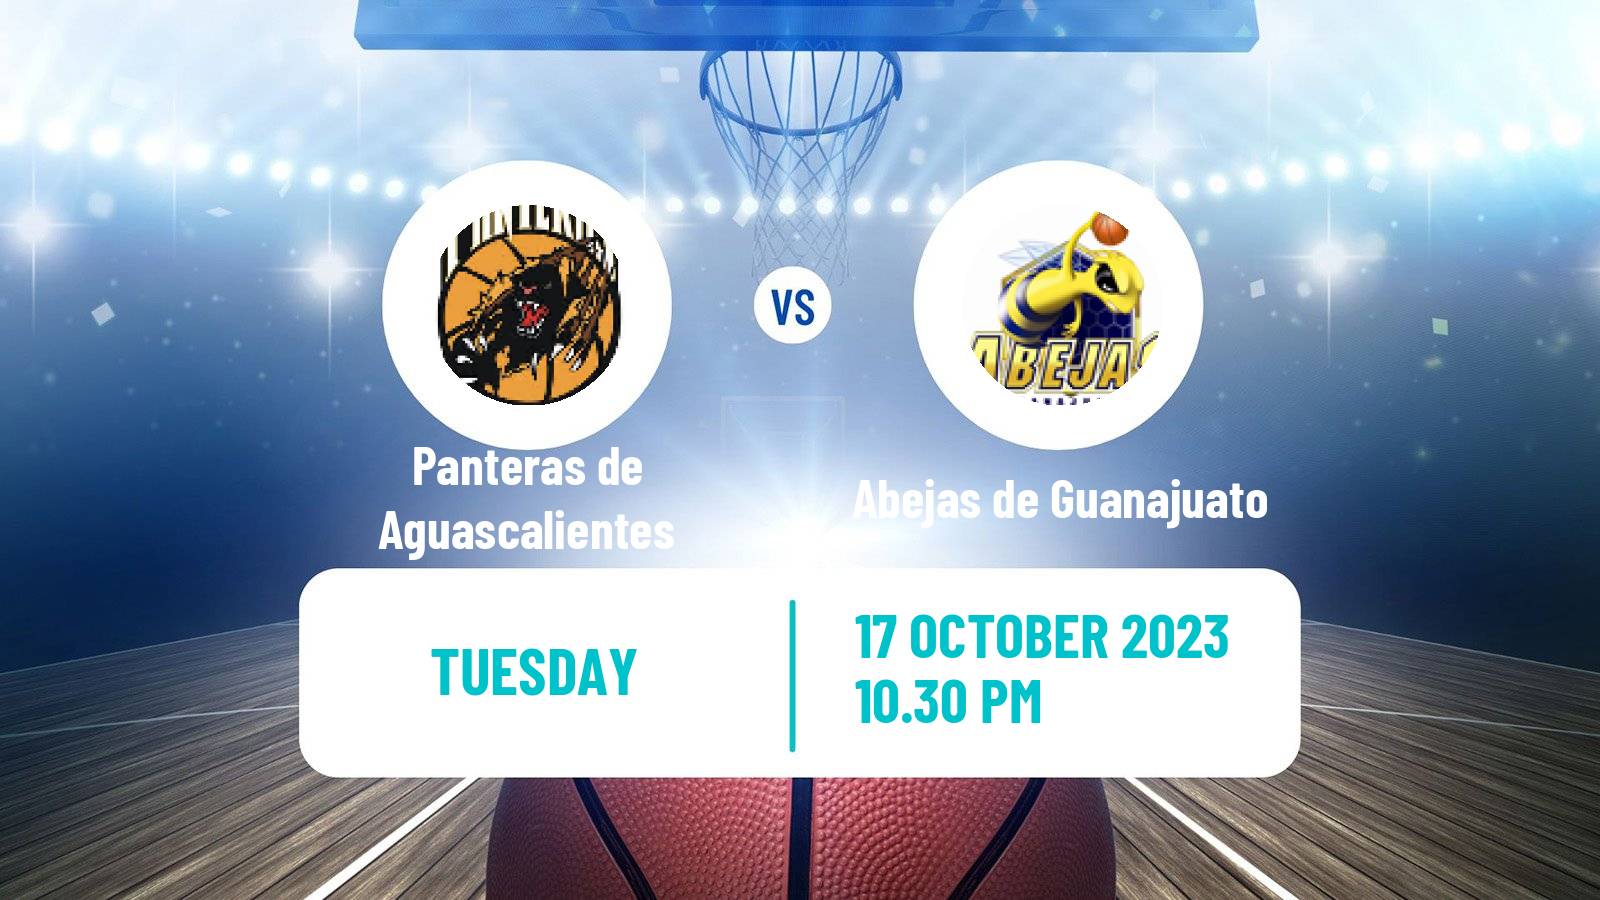 Basketball Mexican LNBP Panteras de Aguascalientes - Abejas de Guanajuato